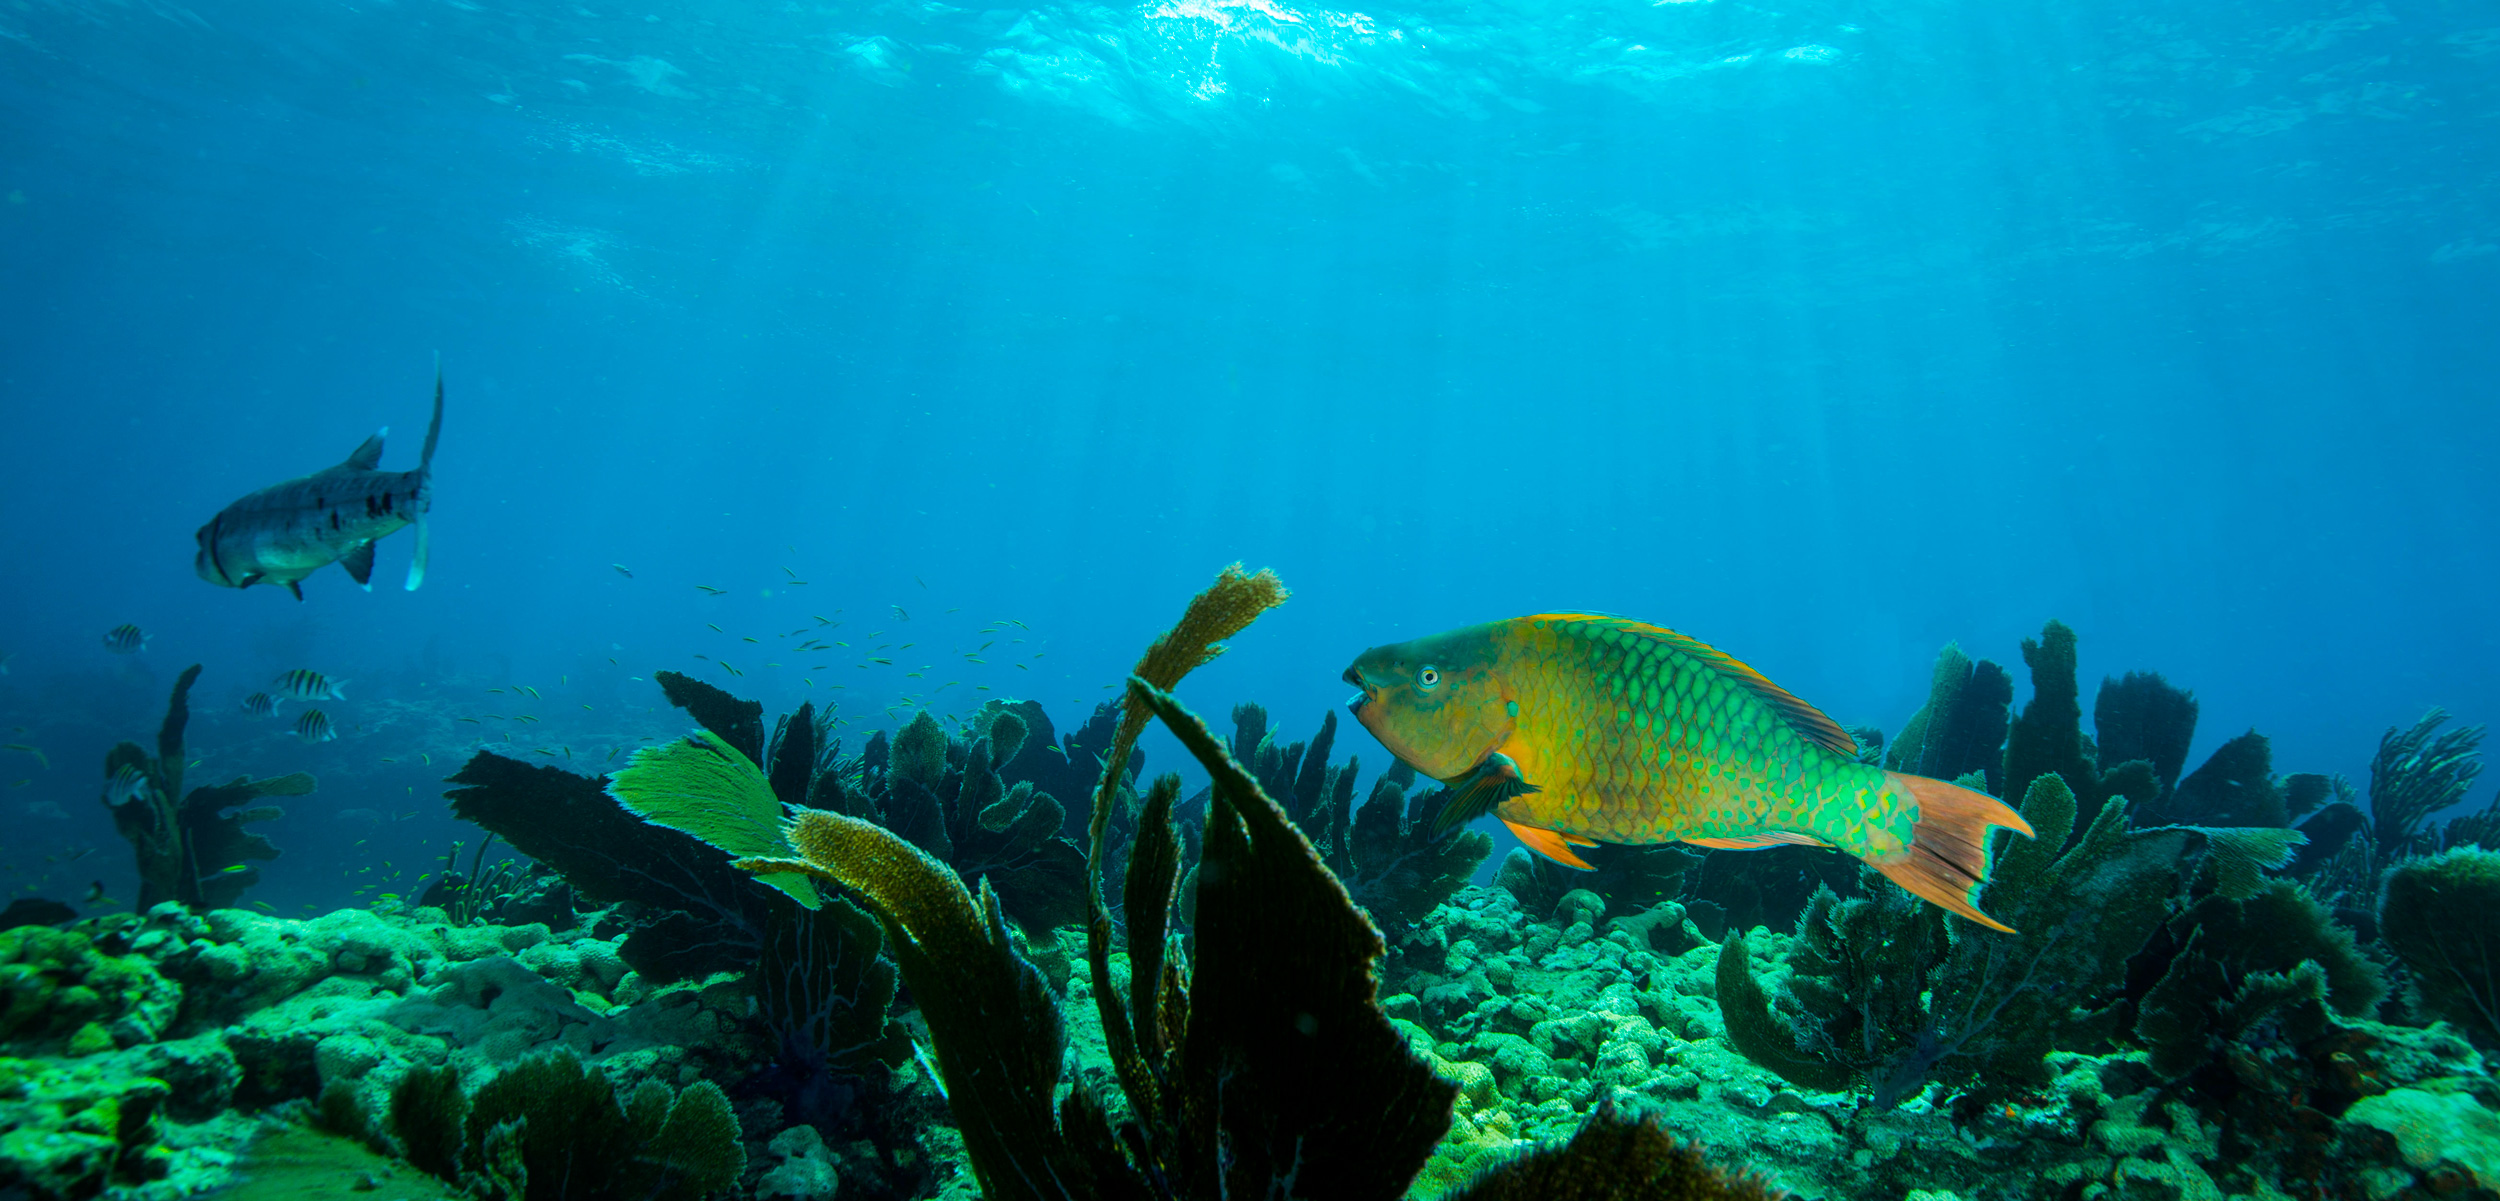 Rainbow parrotfish (Scarus guacamaia) swimming above coral reef